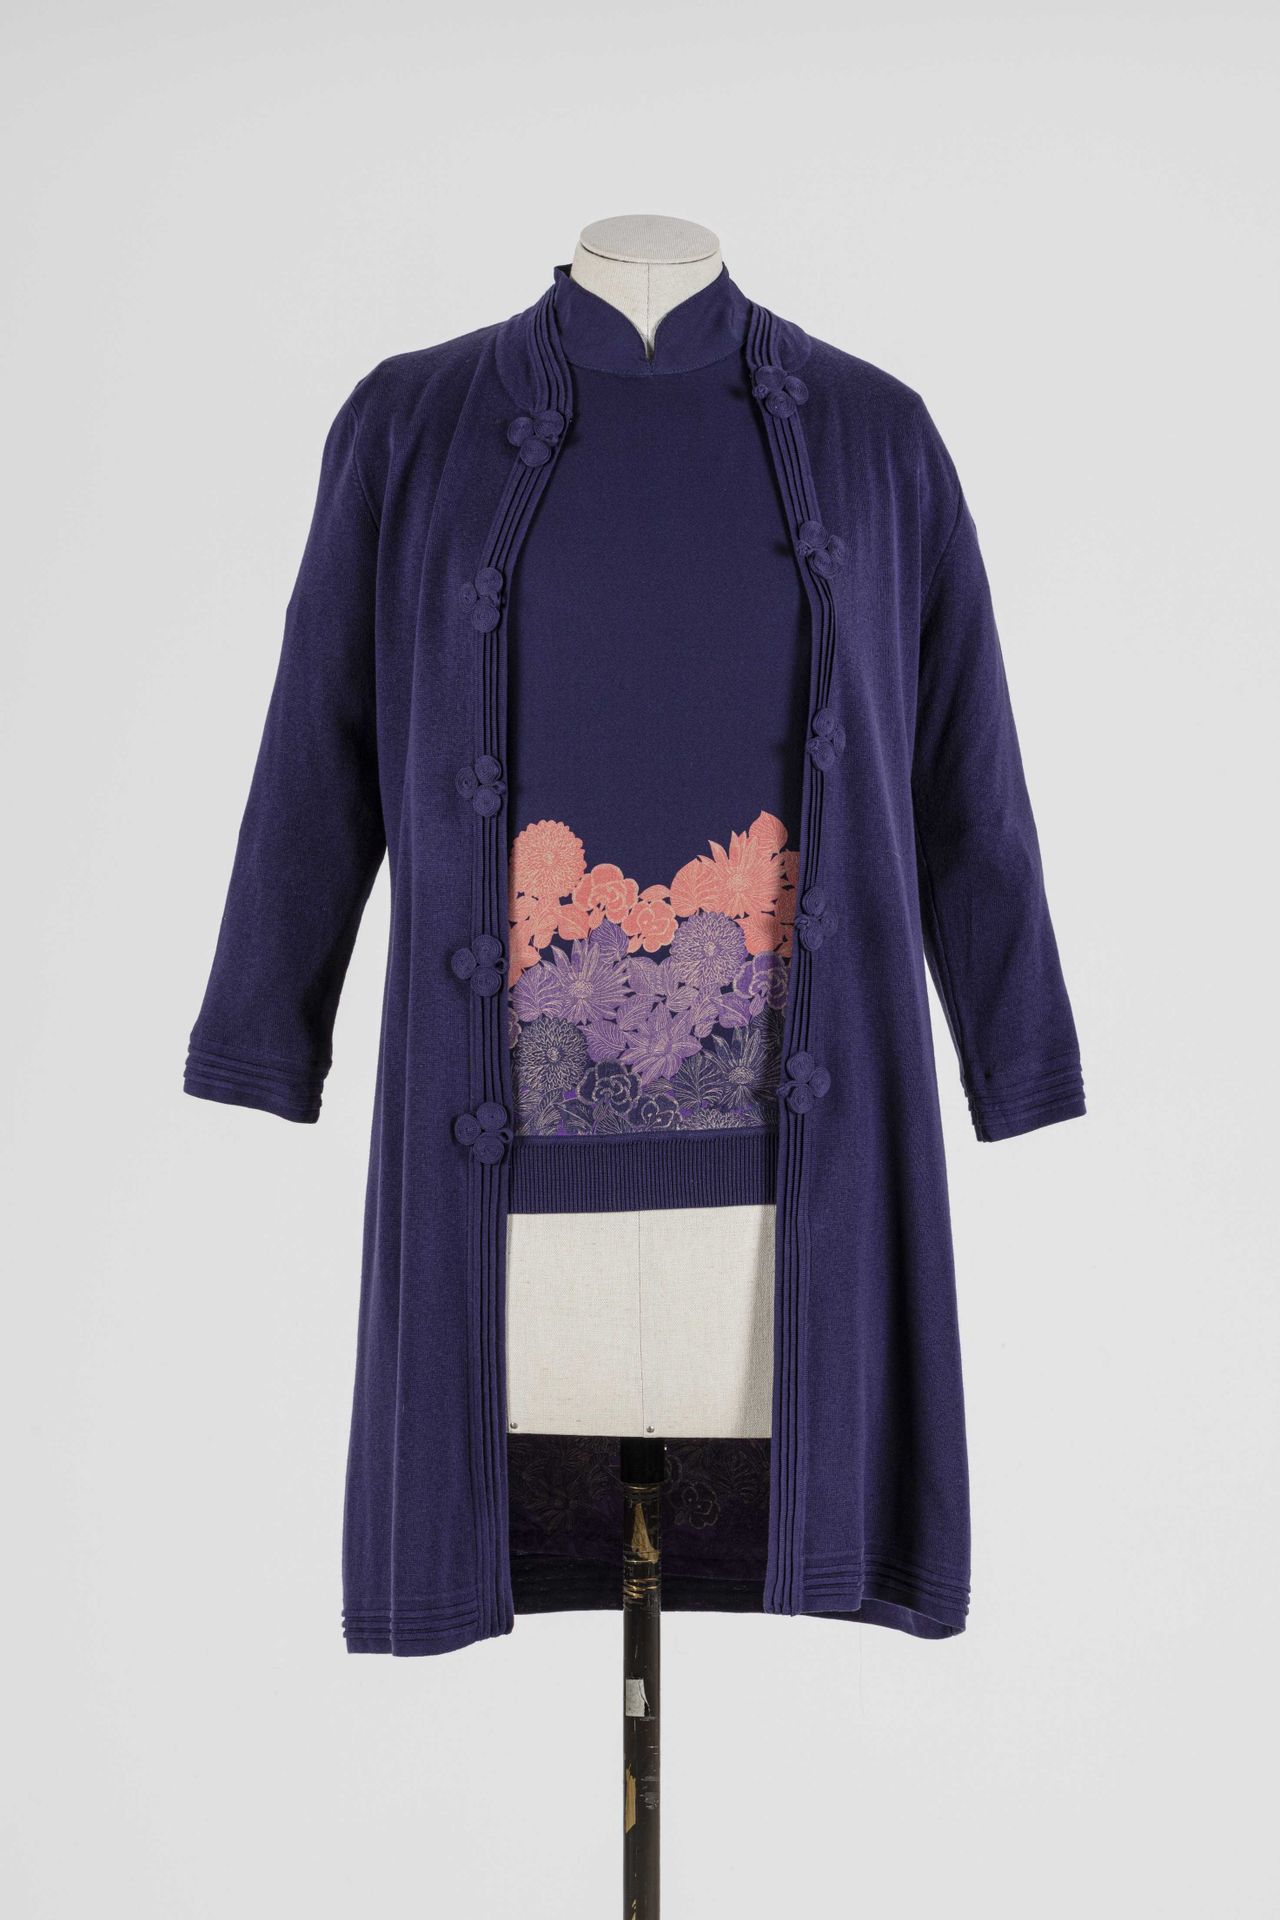 Null 上海滩：套装包括一件蓝色丝绸无袖上衣和Dalhia设计的T。M，和一件蓝色丝绸长马甲，内有花卉图案，毛领，中国结扣。

T.M